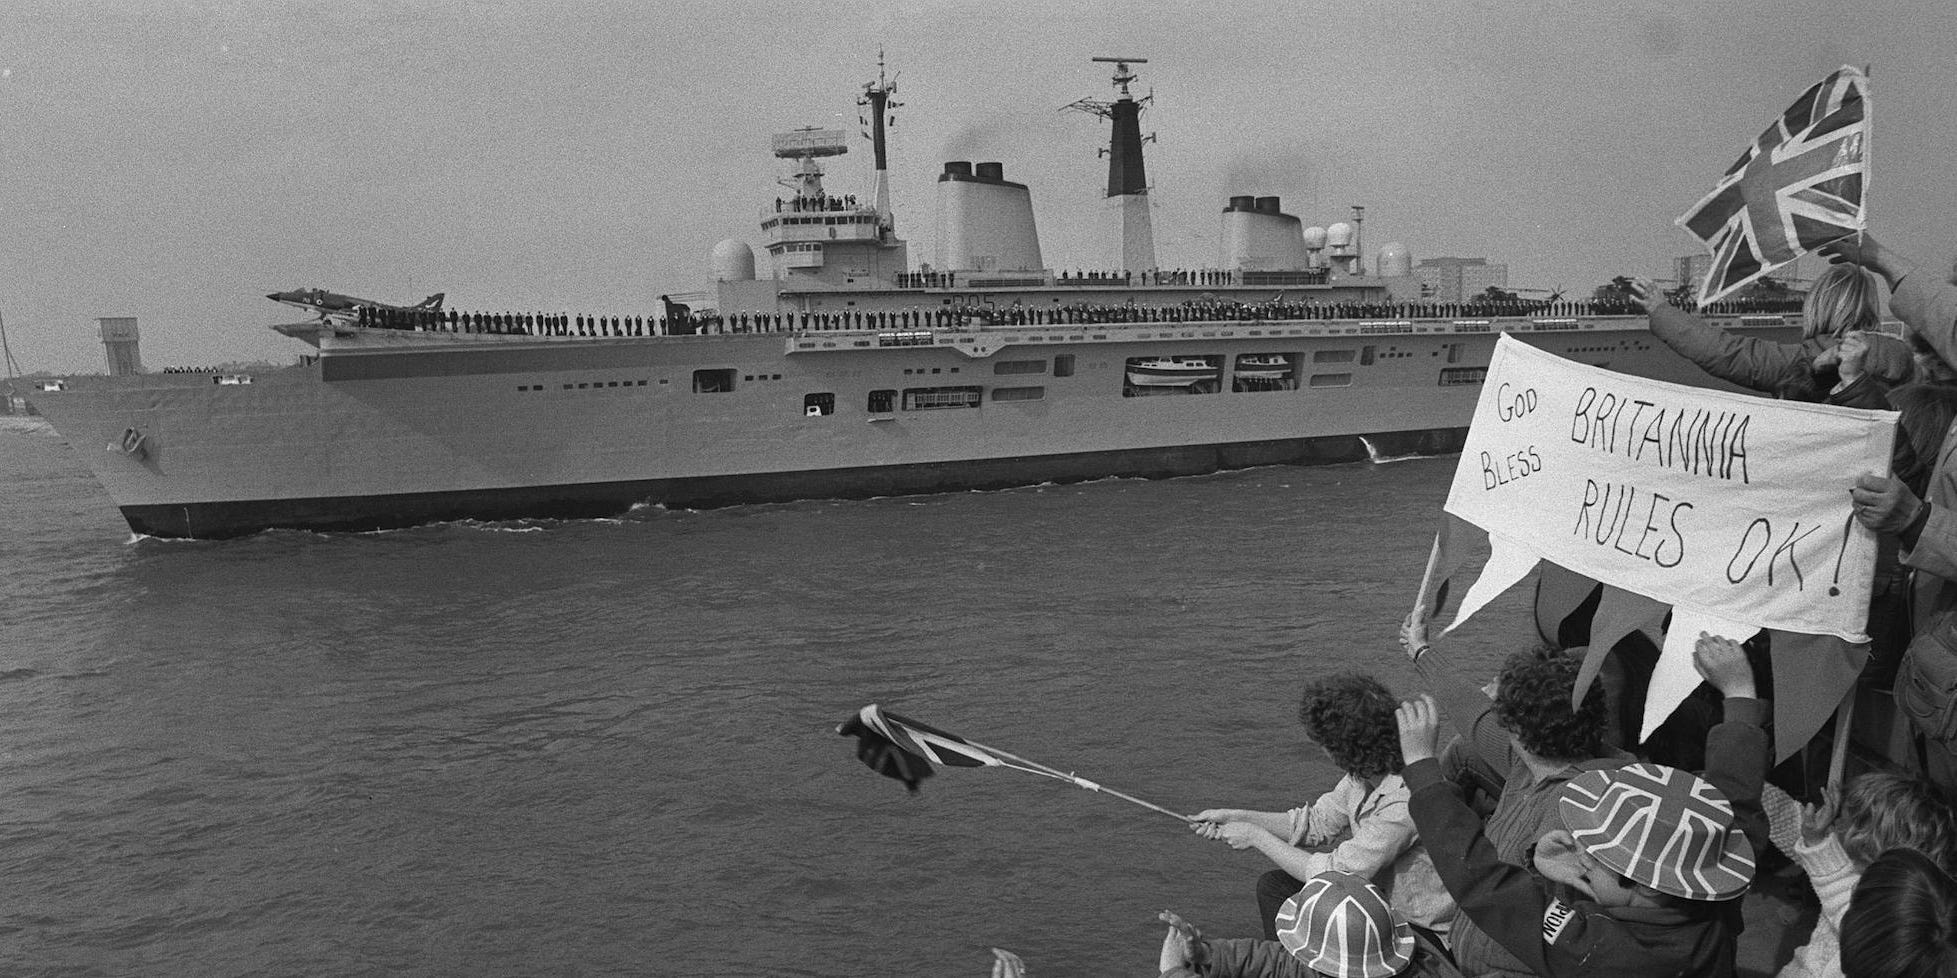 British aircraft carrier HMS Invincible during the Falklands War